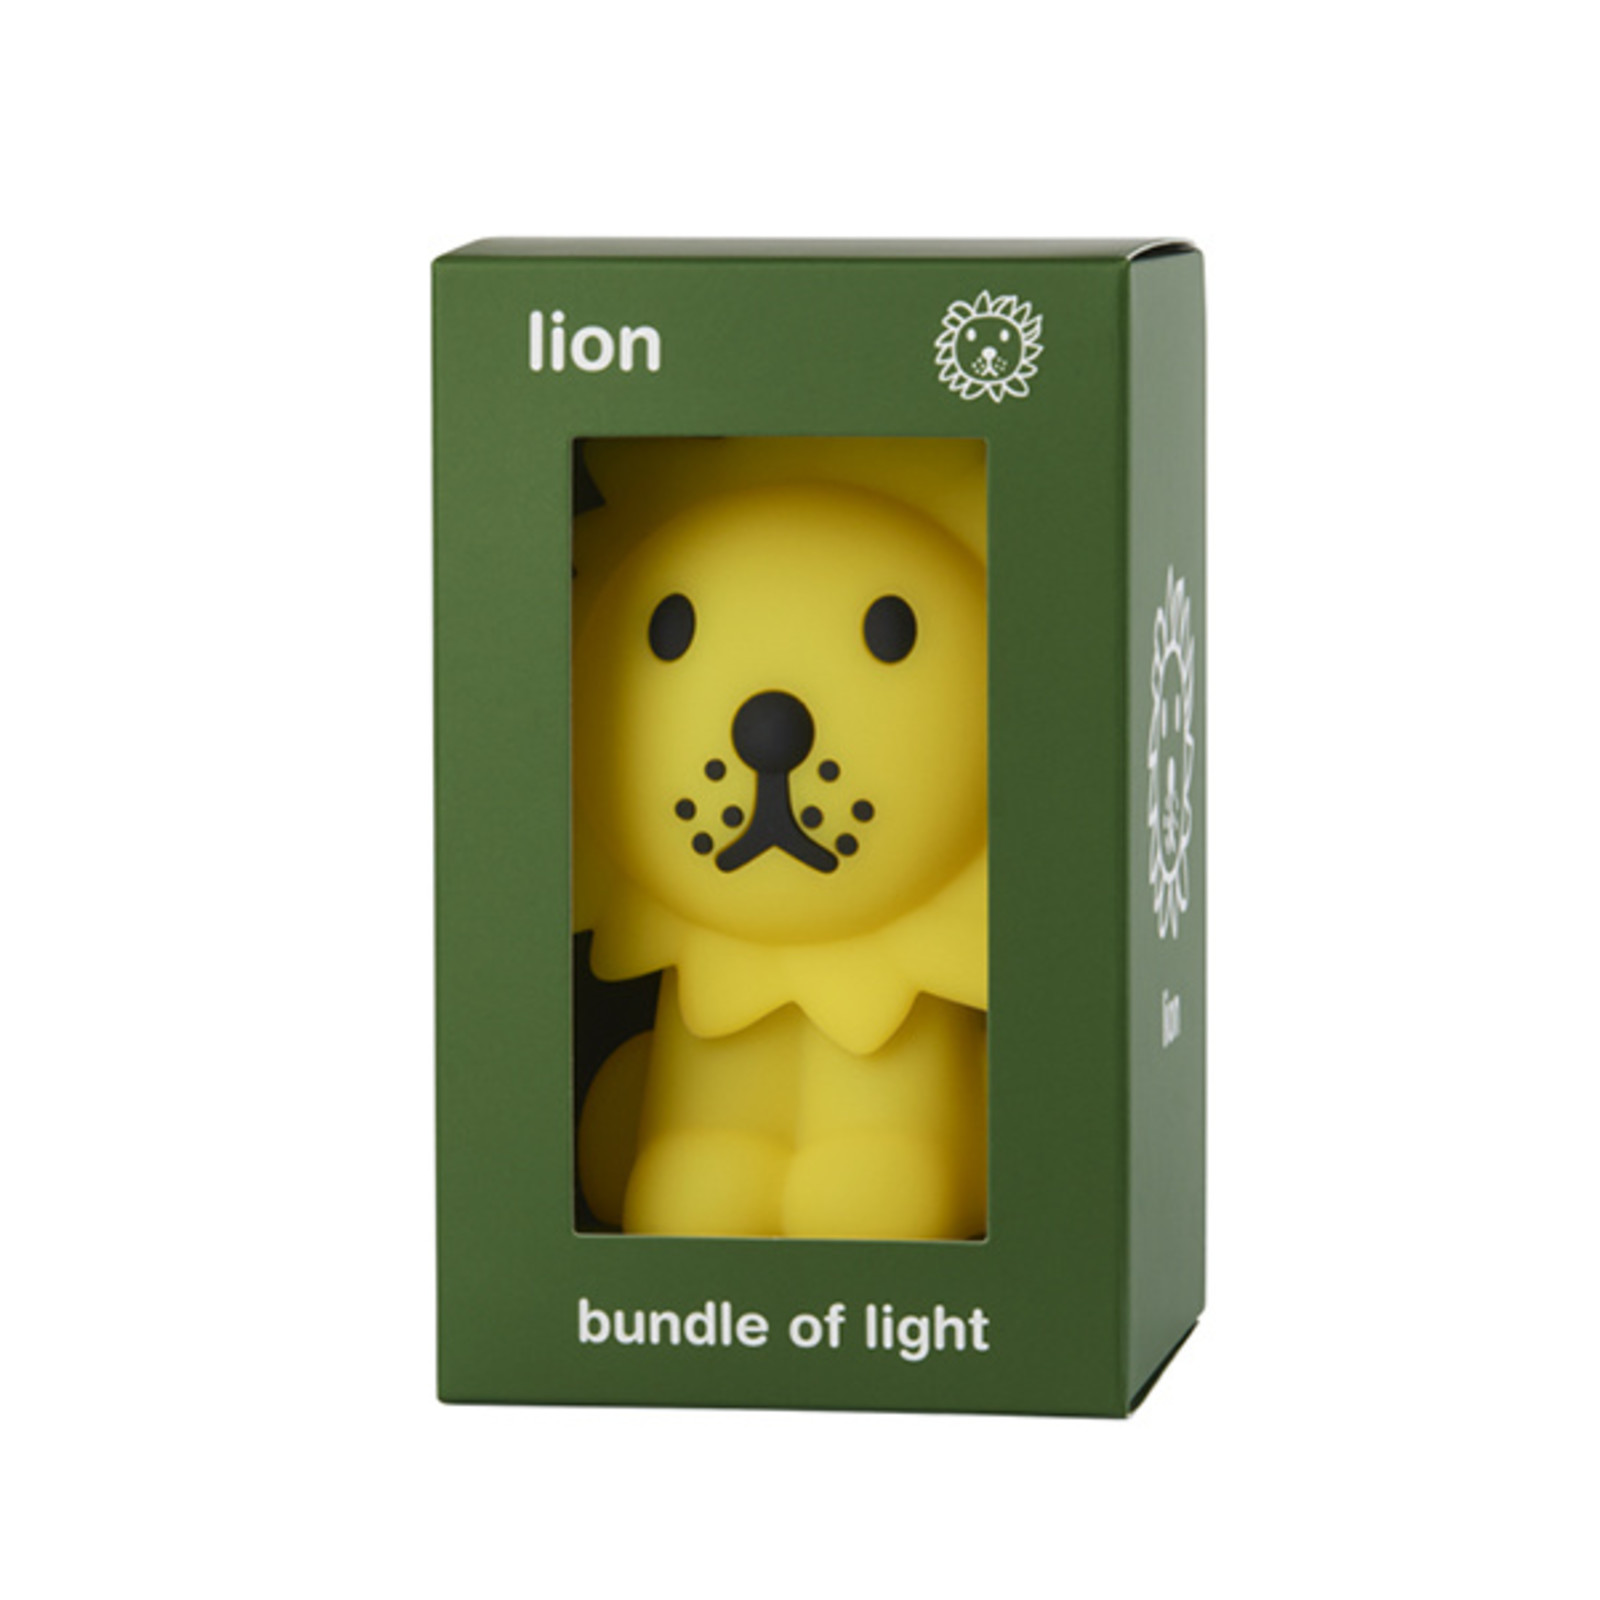 Bundle of light lion